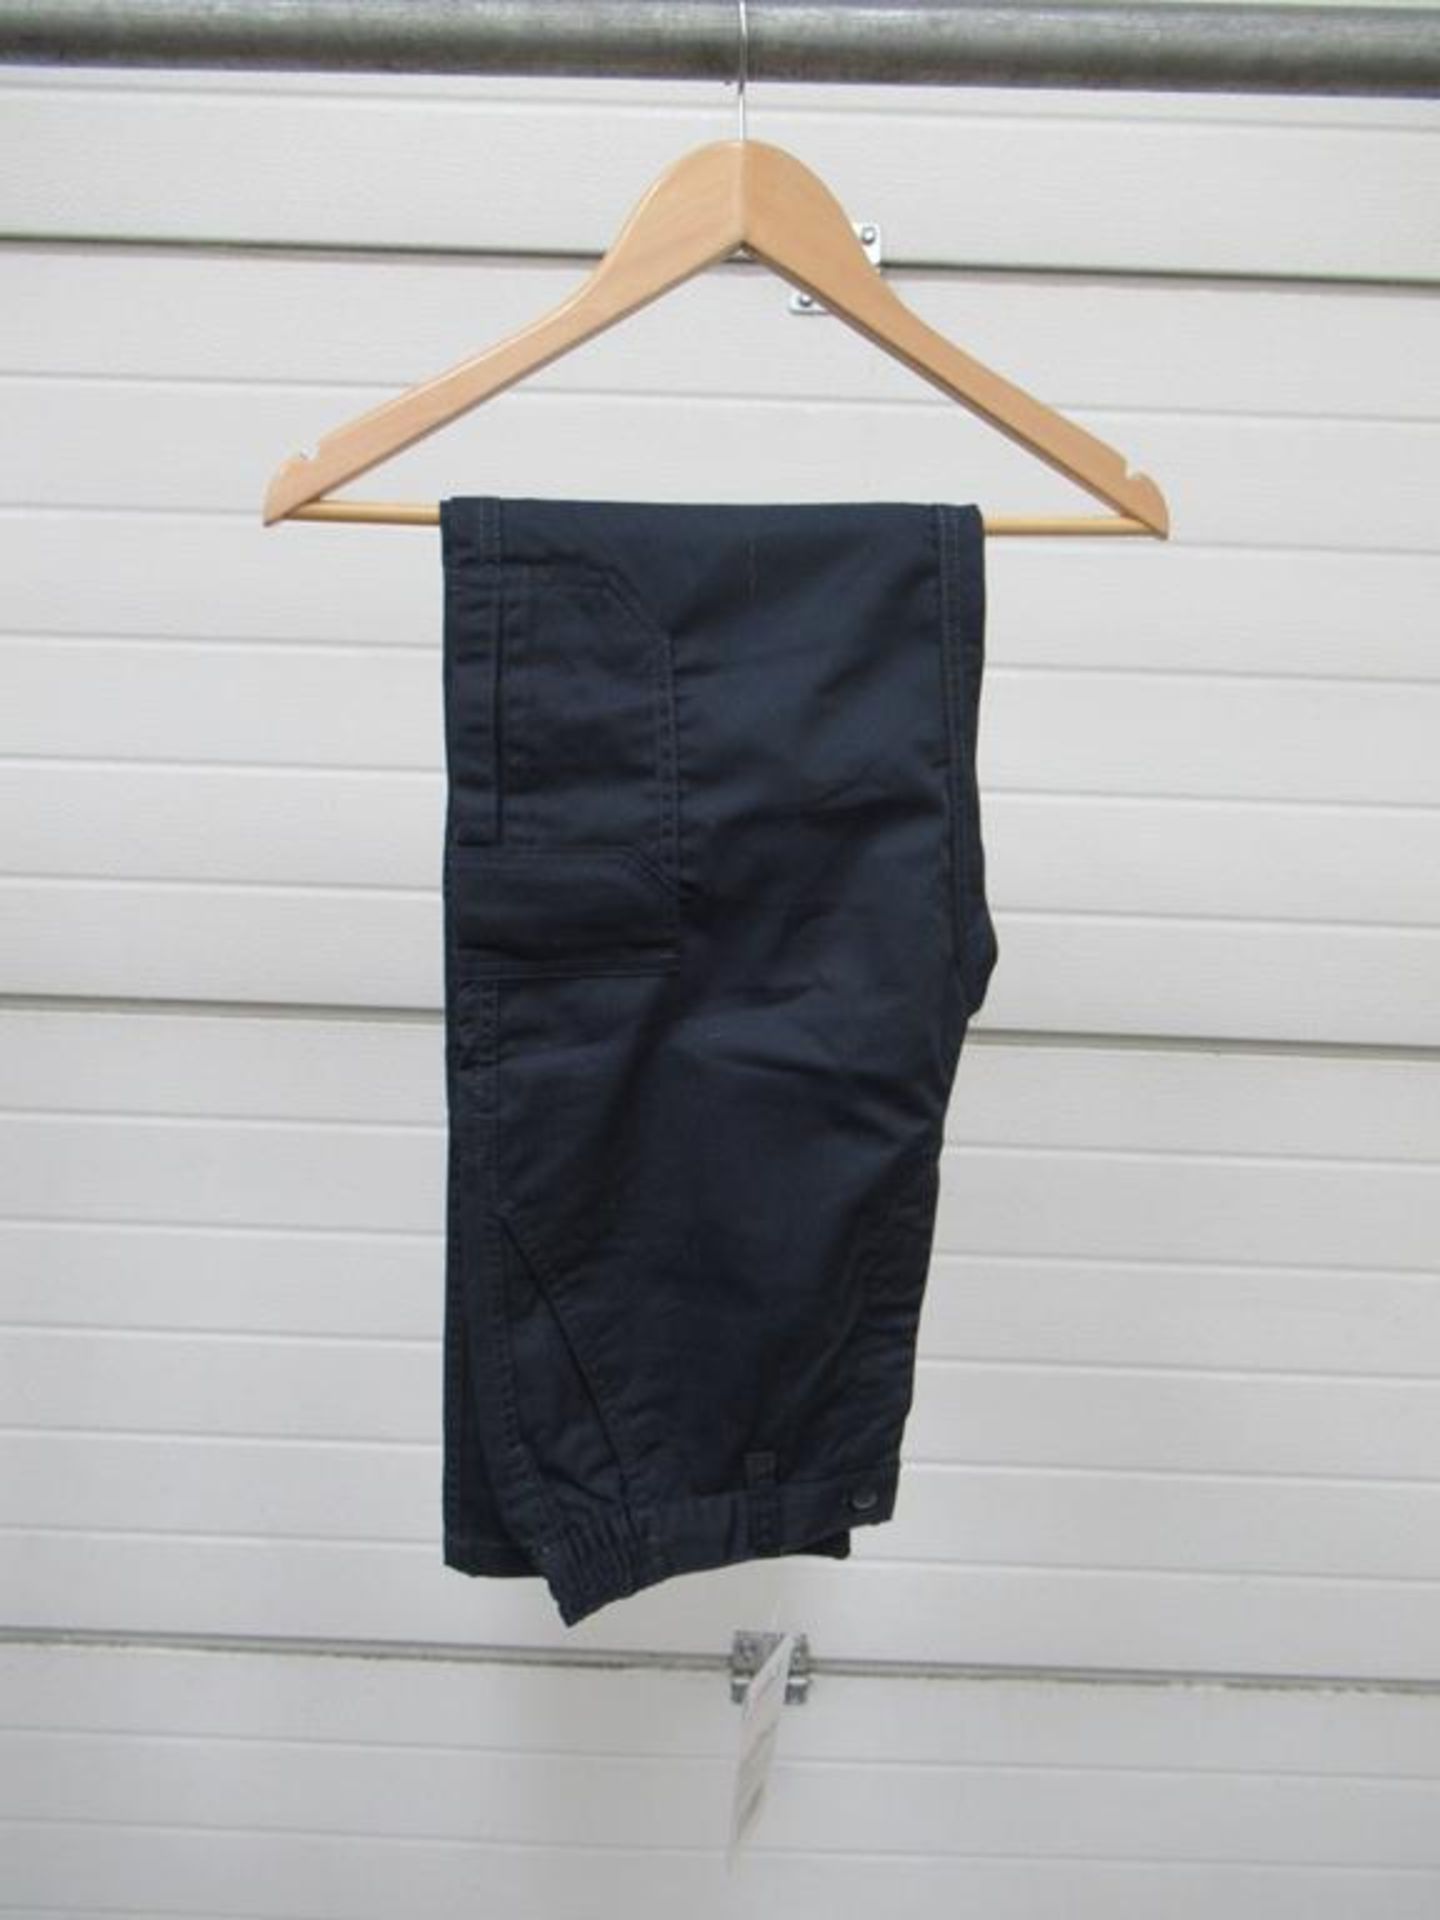 Work Trousers in Navy - 32.5" Leg.